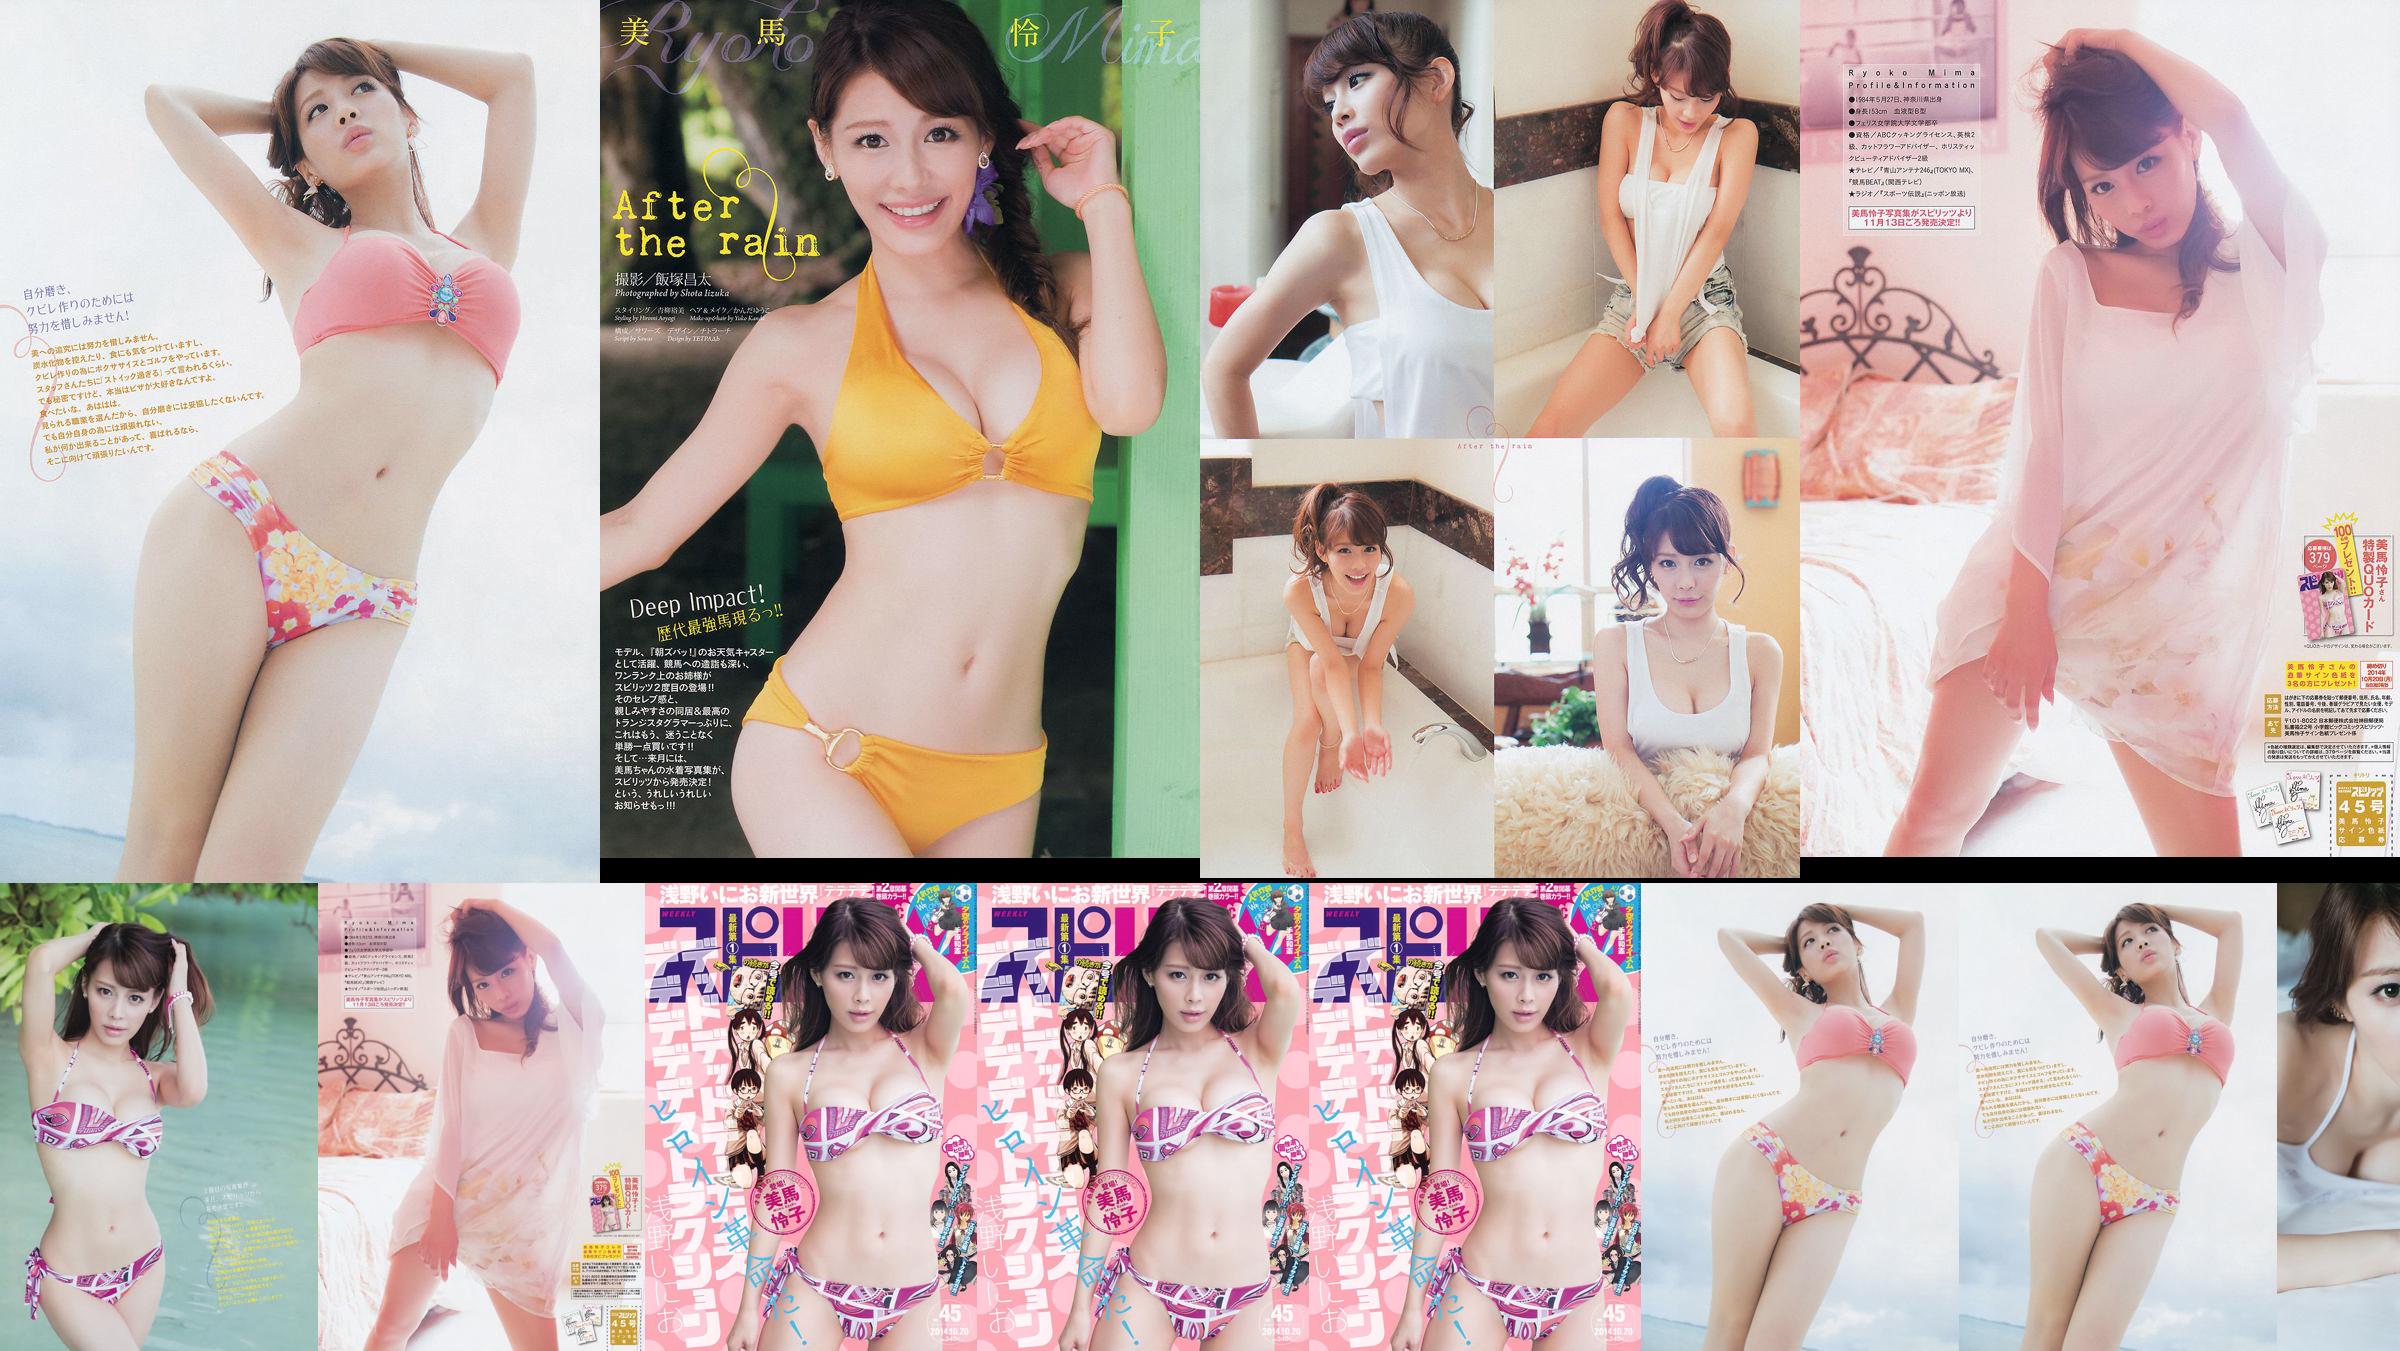 [Semangat Komik Besar Mingguan] Mima Reiko 2014 Majalah Foto No.45 No.53a968 Halaman 2